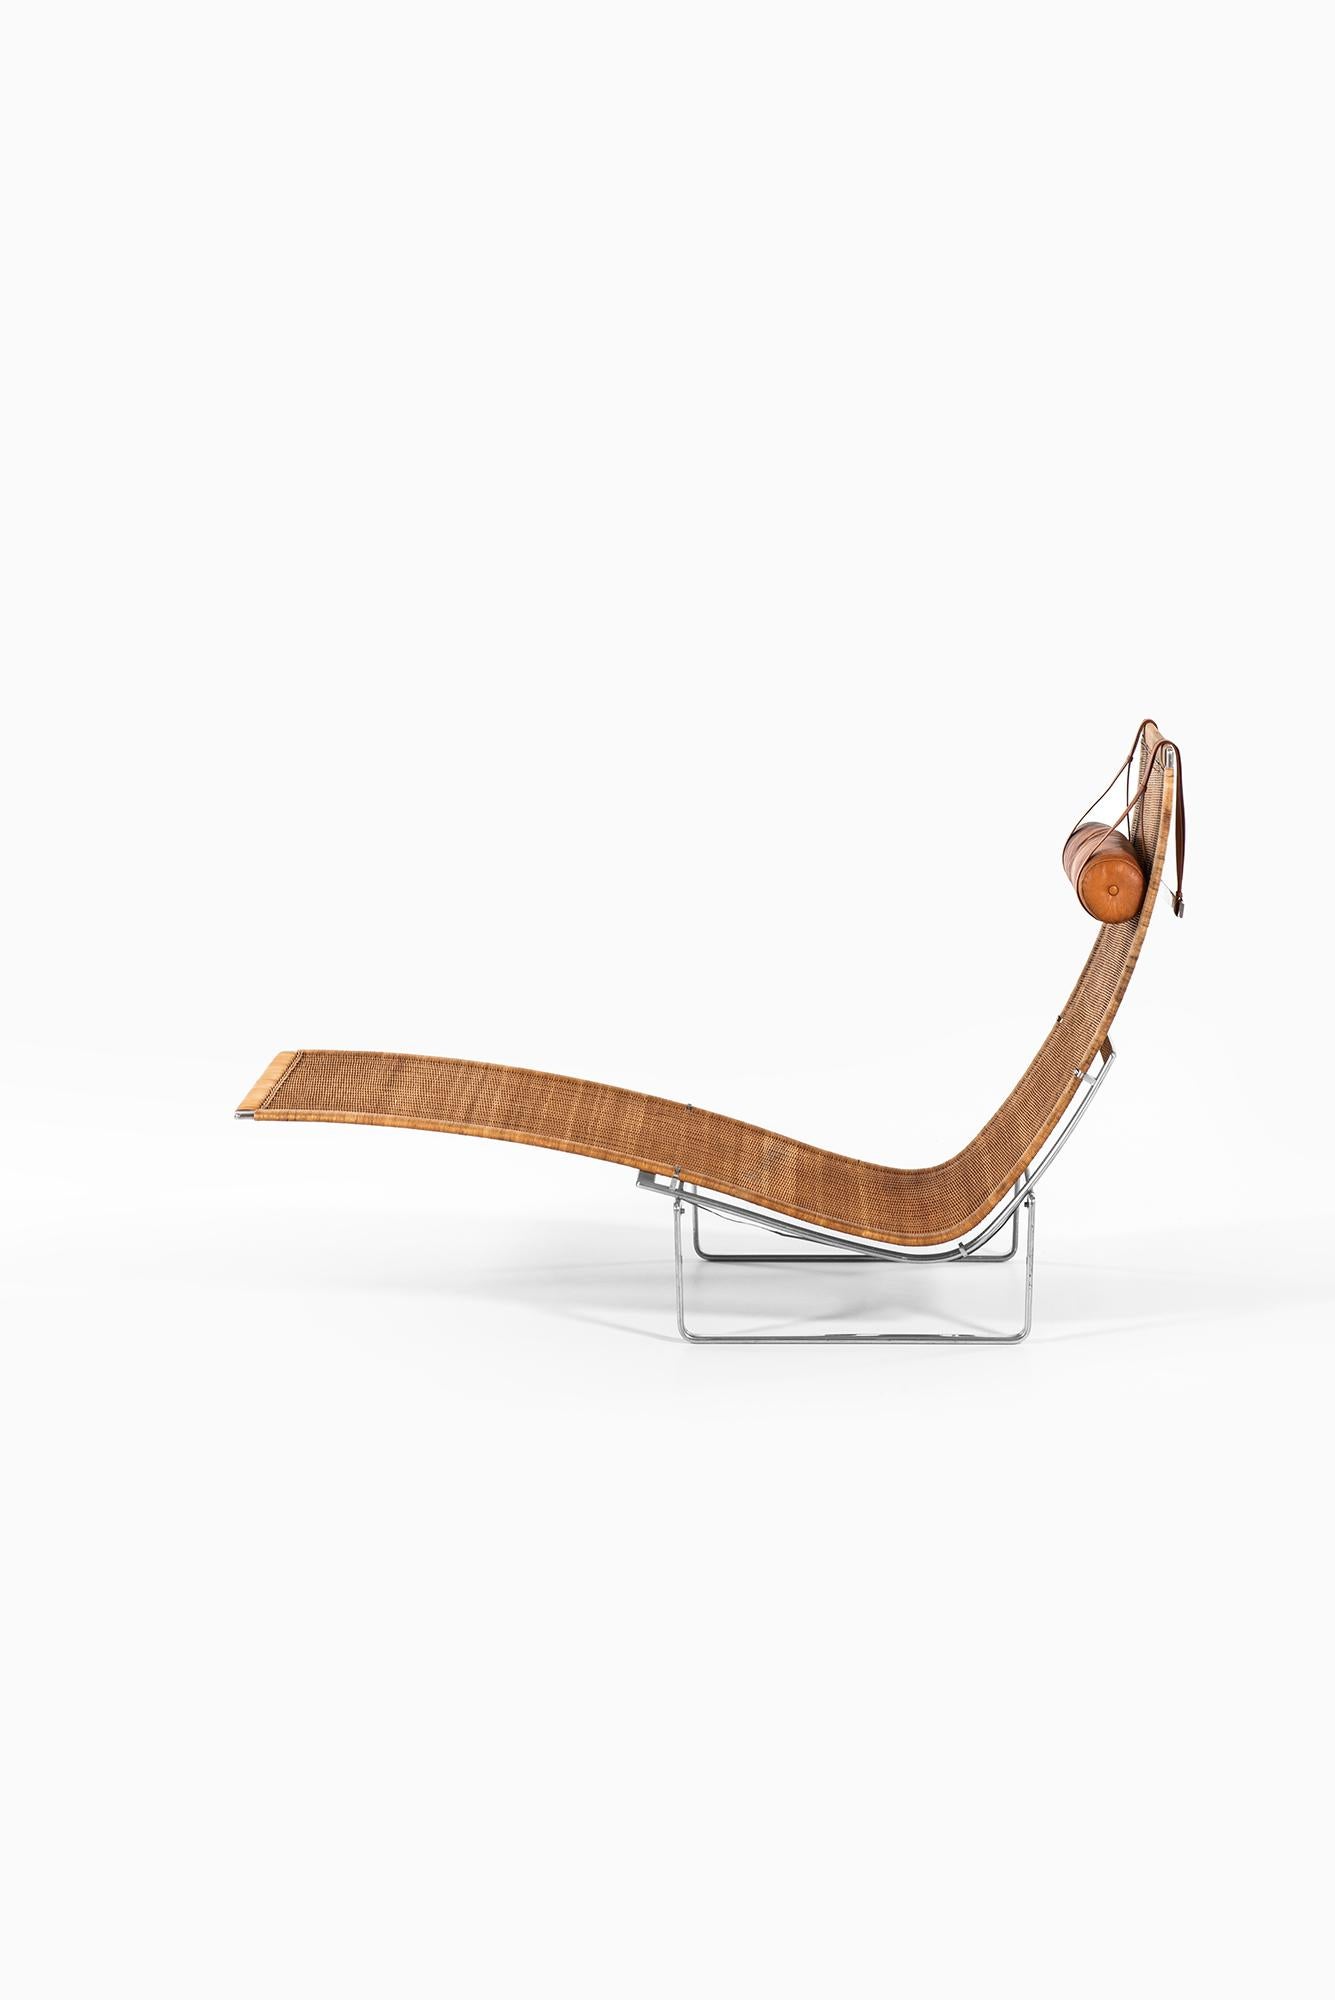 Rare lounge/reclining chair model PK-24 designed by Poul Kjærholm. Produced by E. Kold Christensen in Denmark.